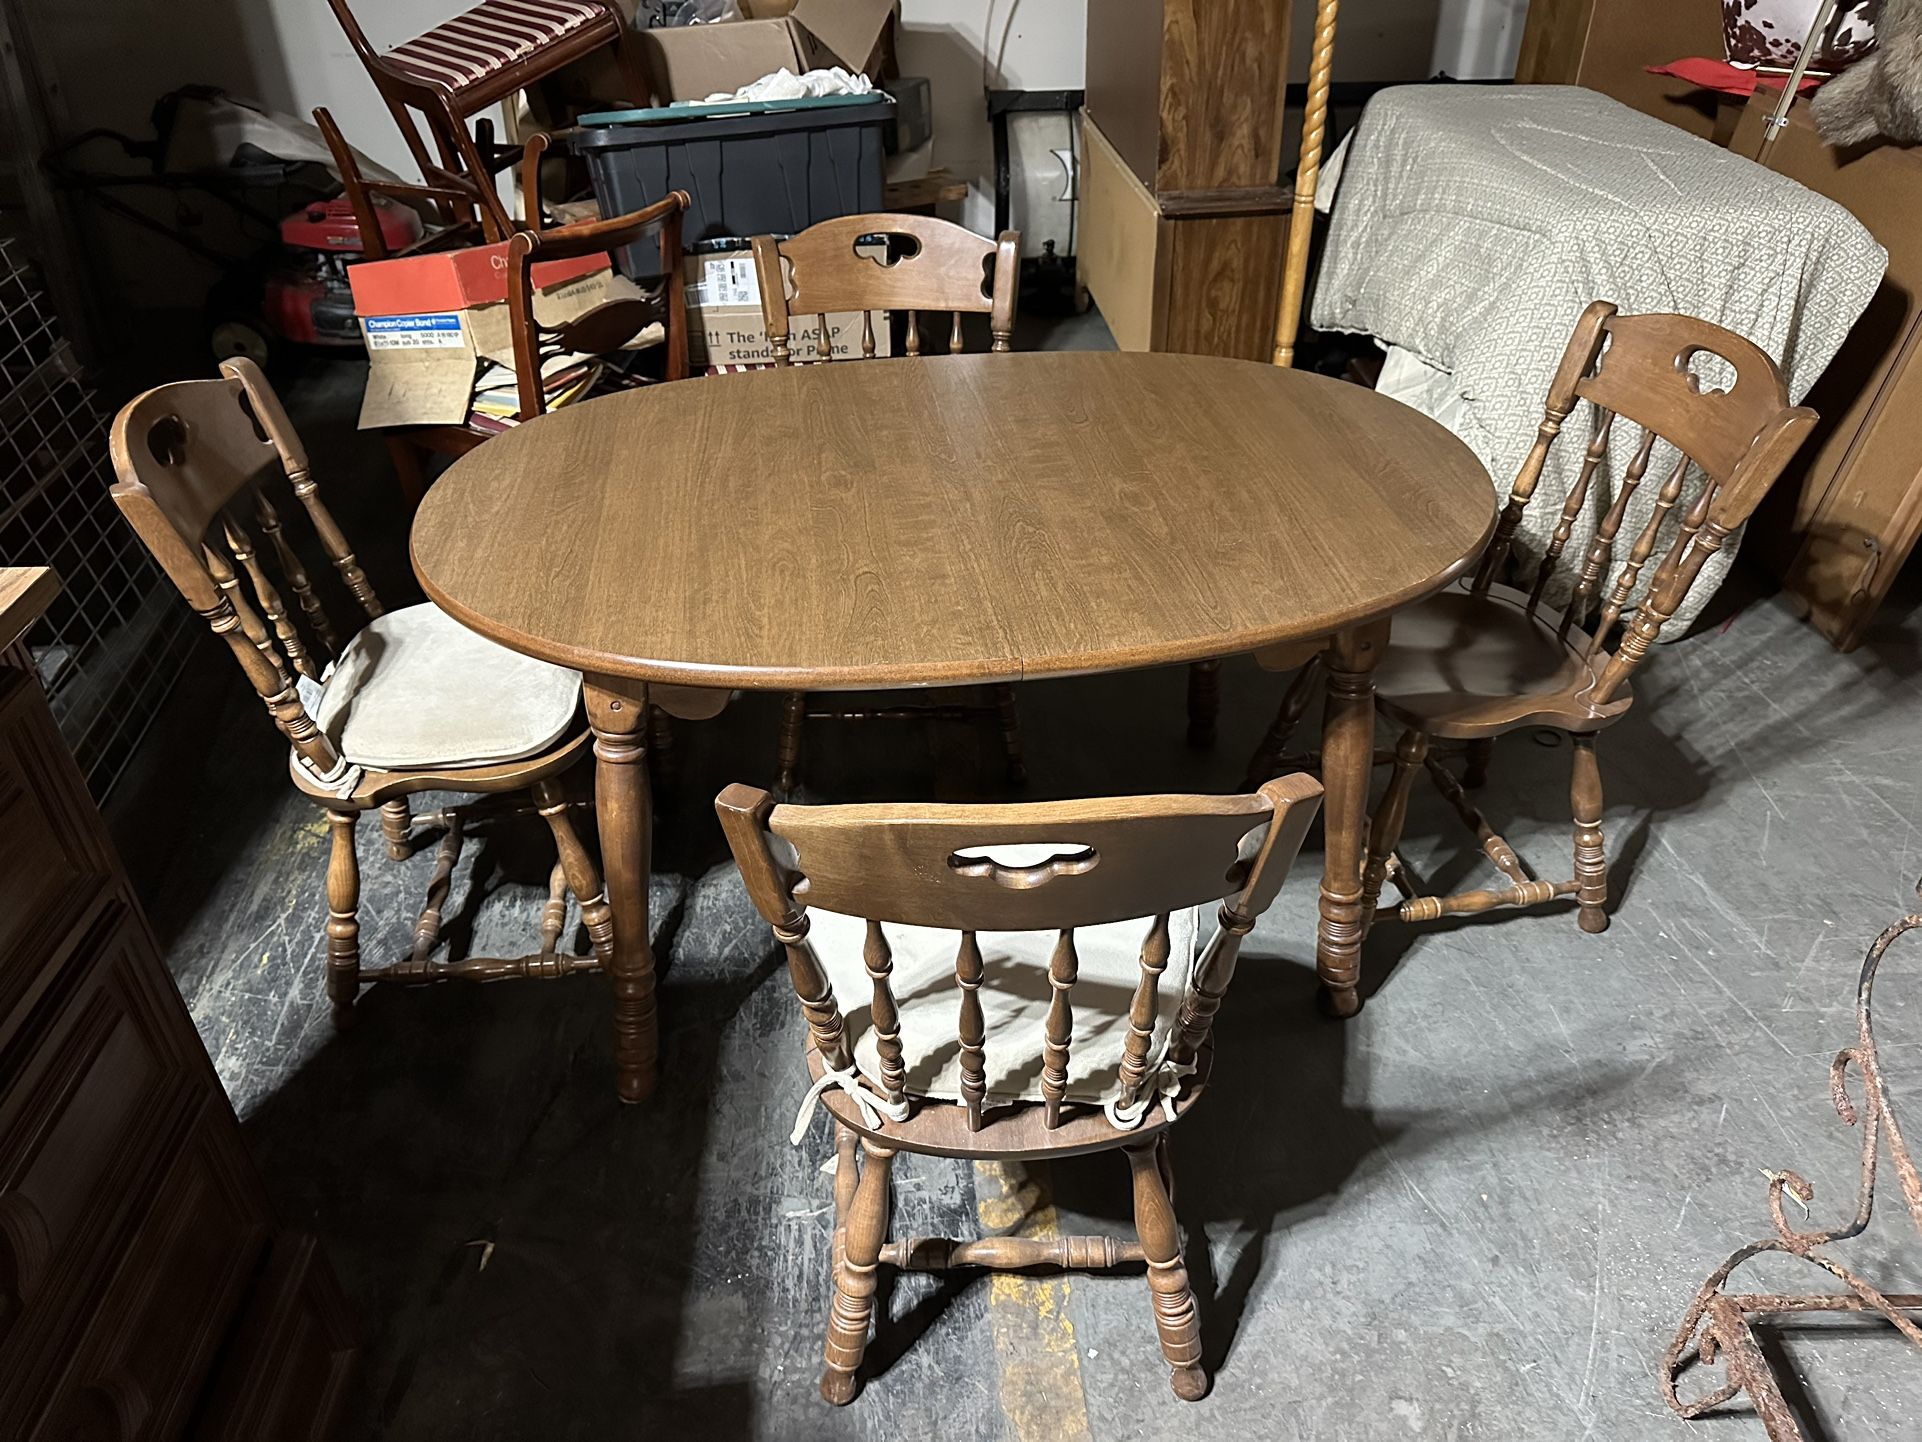 Buck-aneer colonial table set